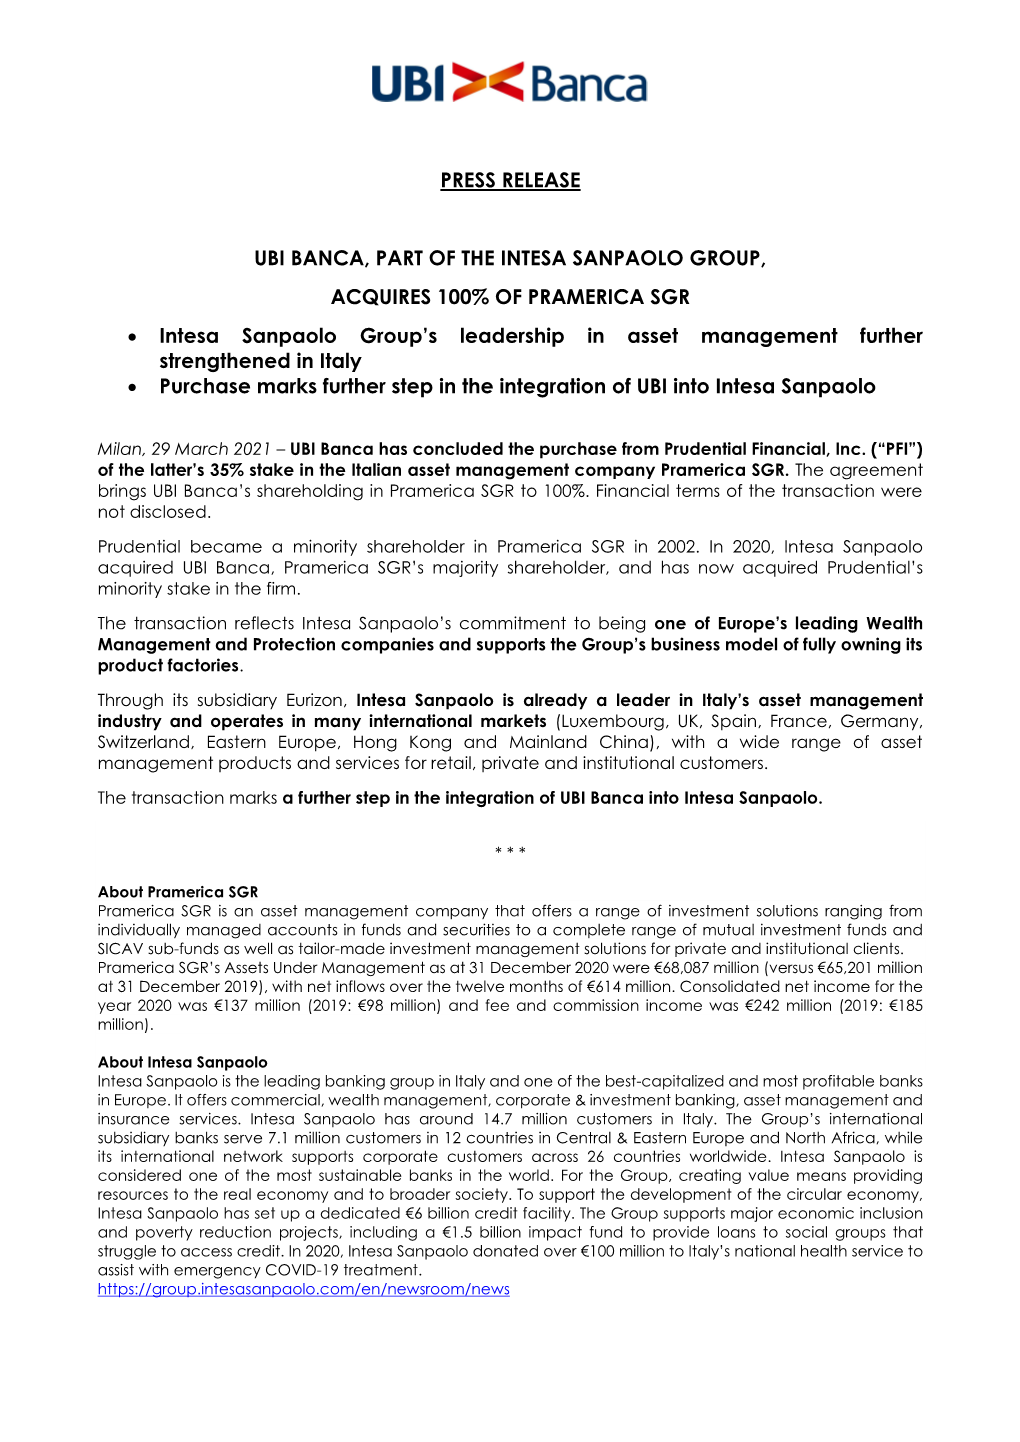 Press Release Ubi Banca, Part of the Intesa Sanpaolo